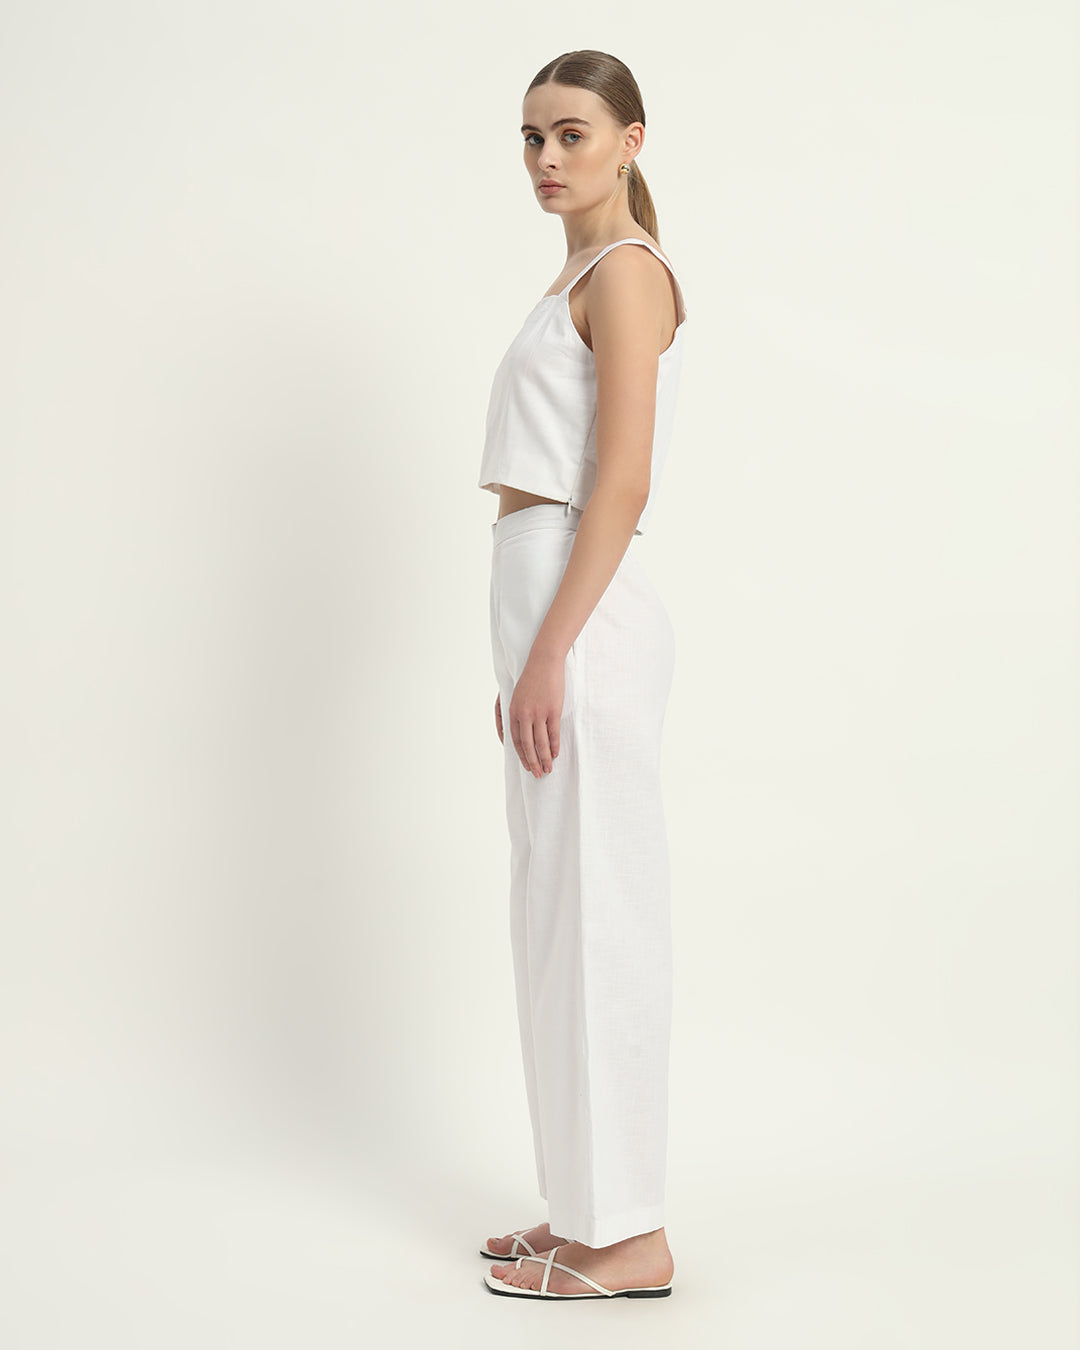 Pants Matching Set- White Linen Sleek Square